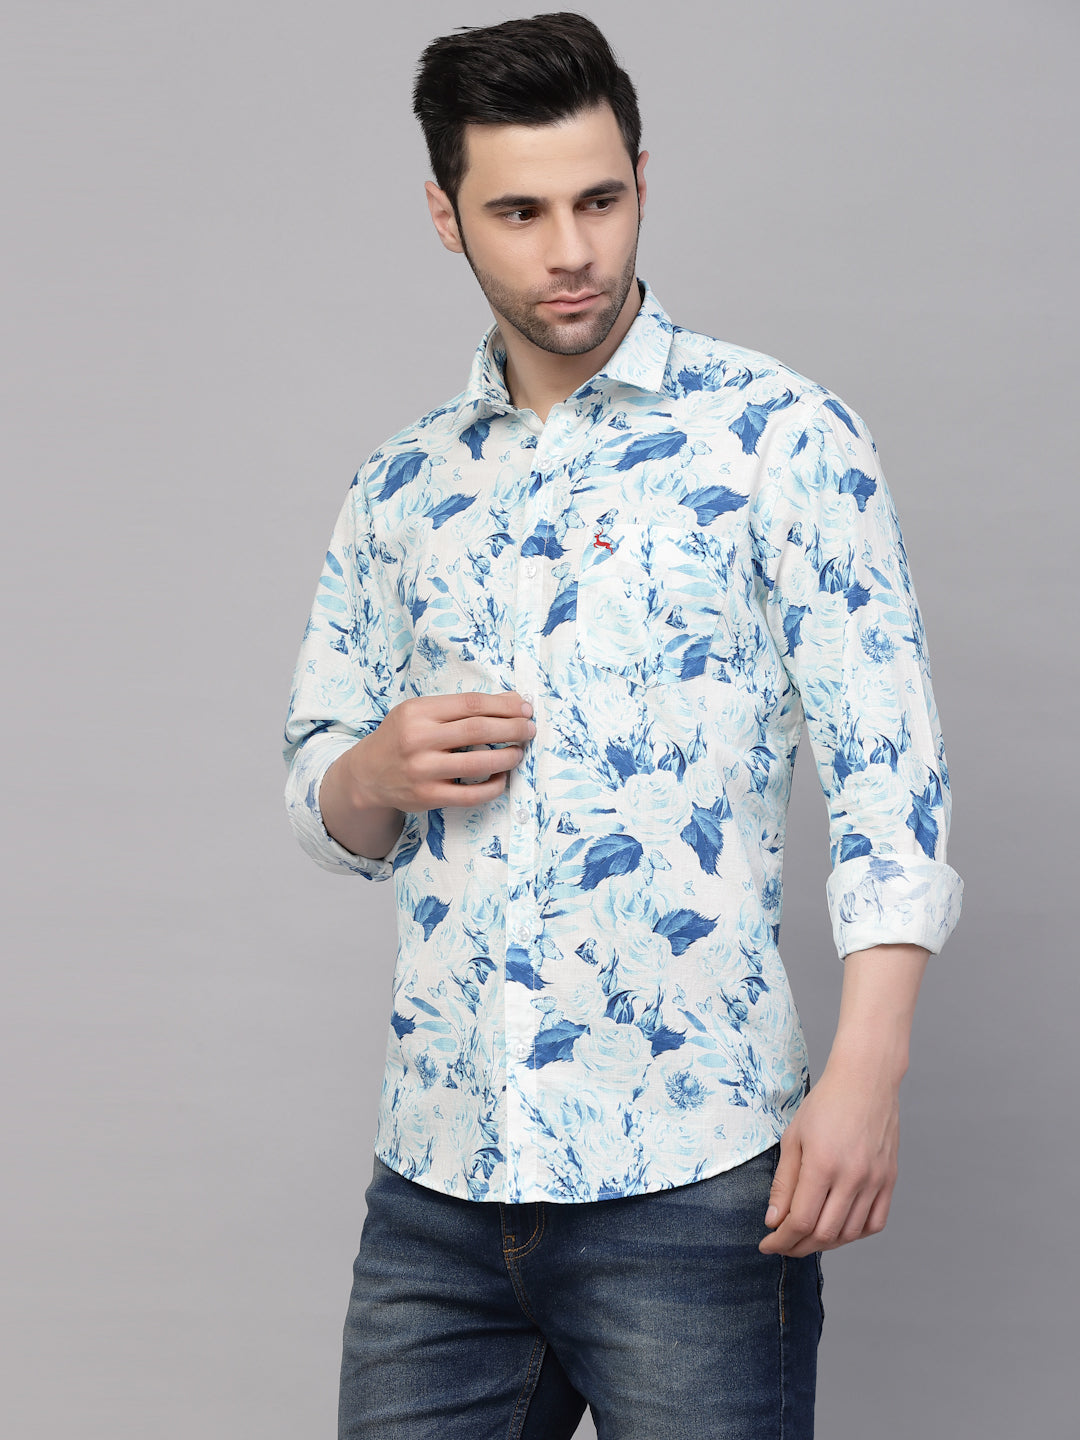 Valbone Men’s Digital Print Blue Leafs Printed Regular Fit Casual Shirt Full Sleeves